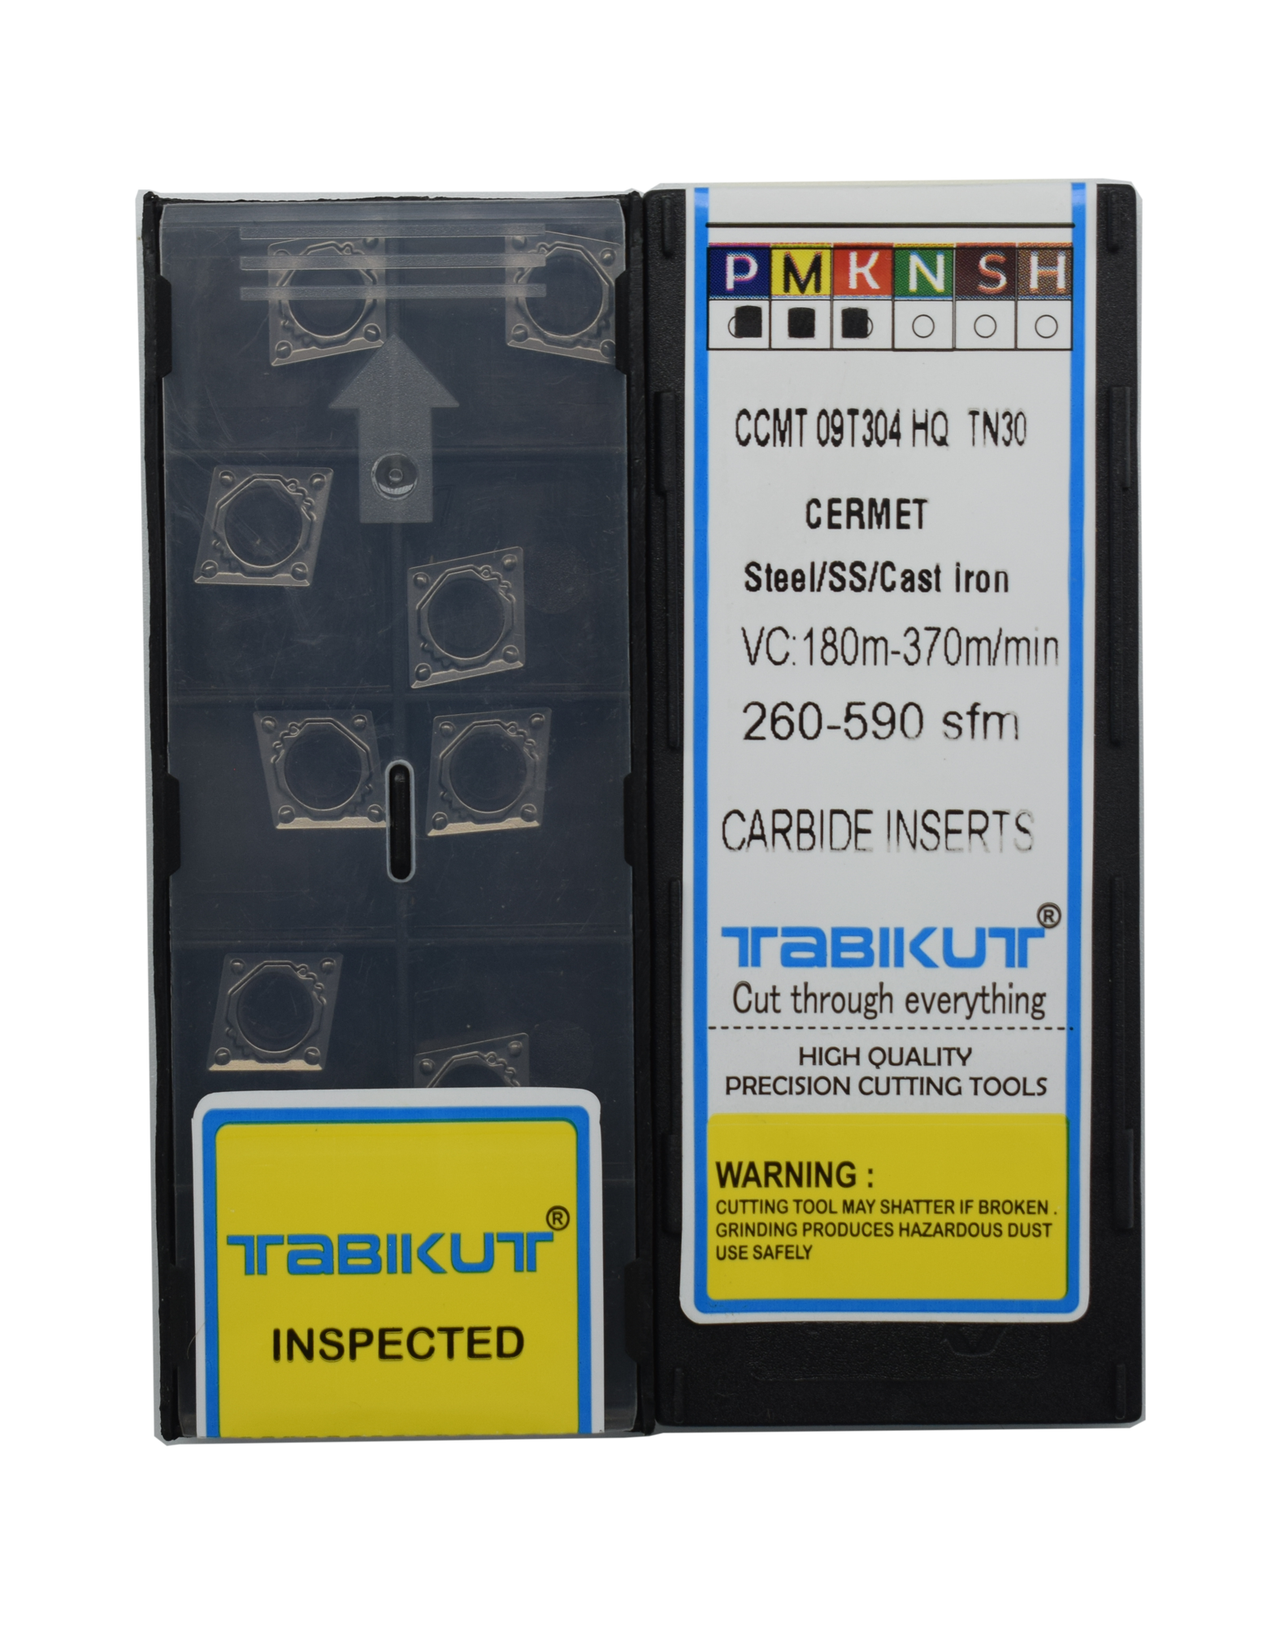 CCMT09T304/08 HQ TN30 cermet carbide insert pack of 10